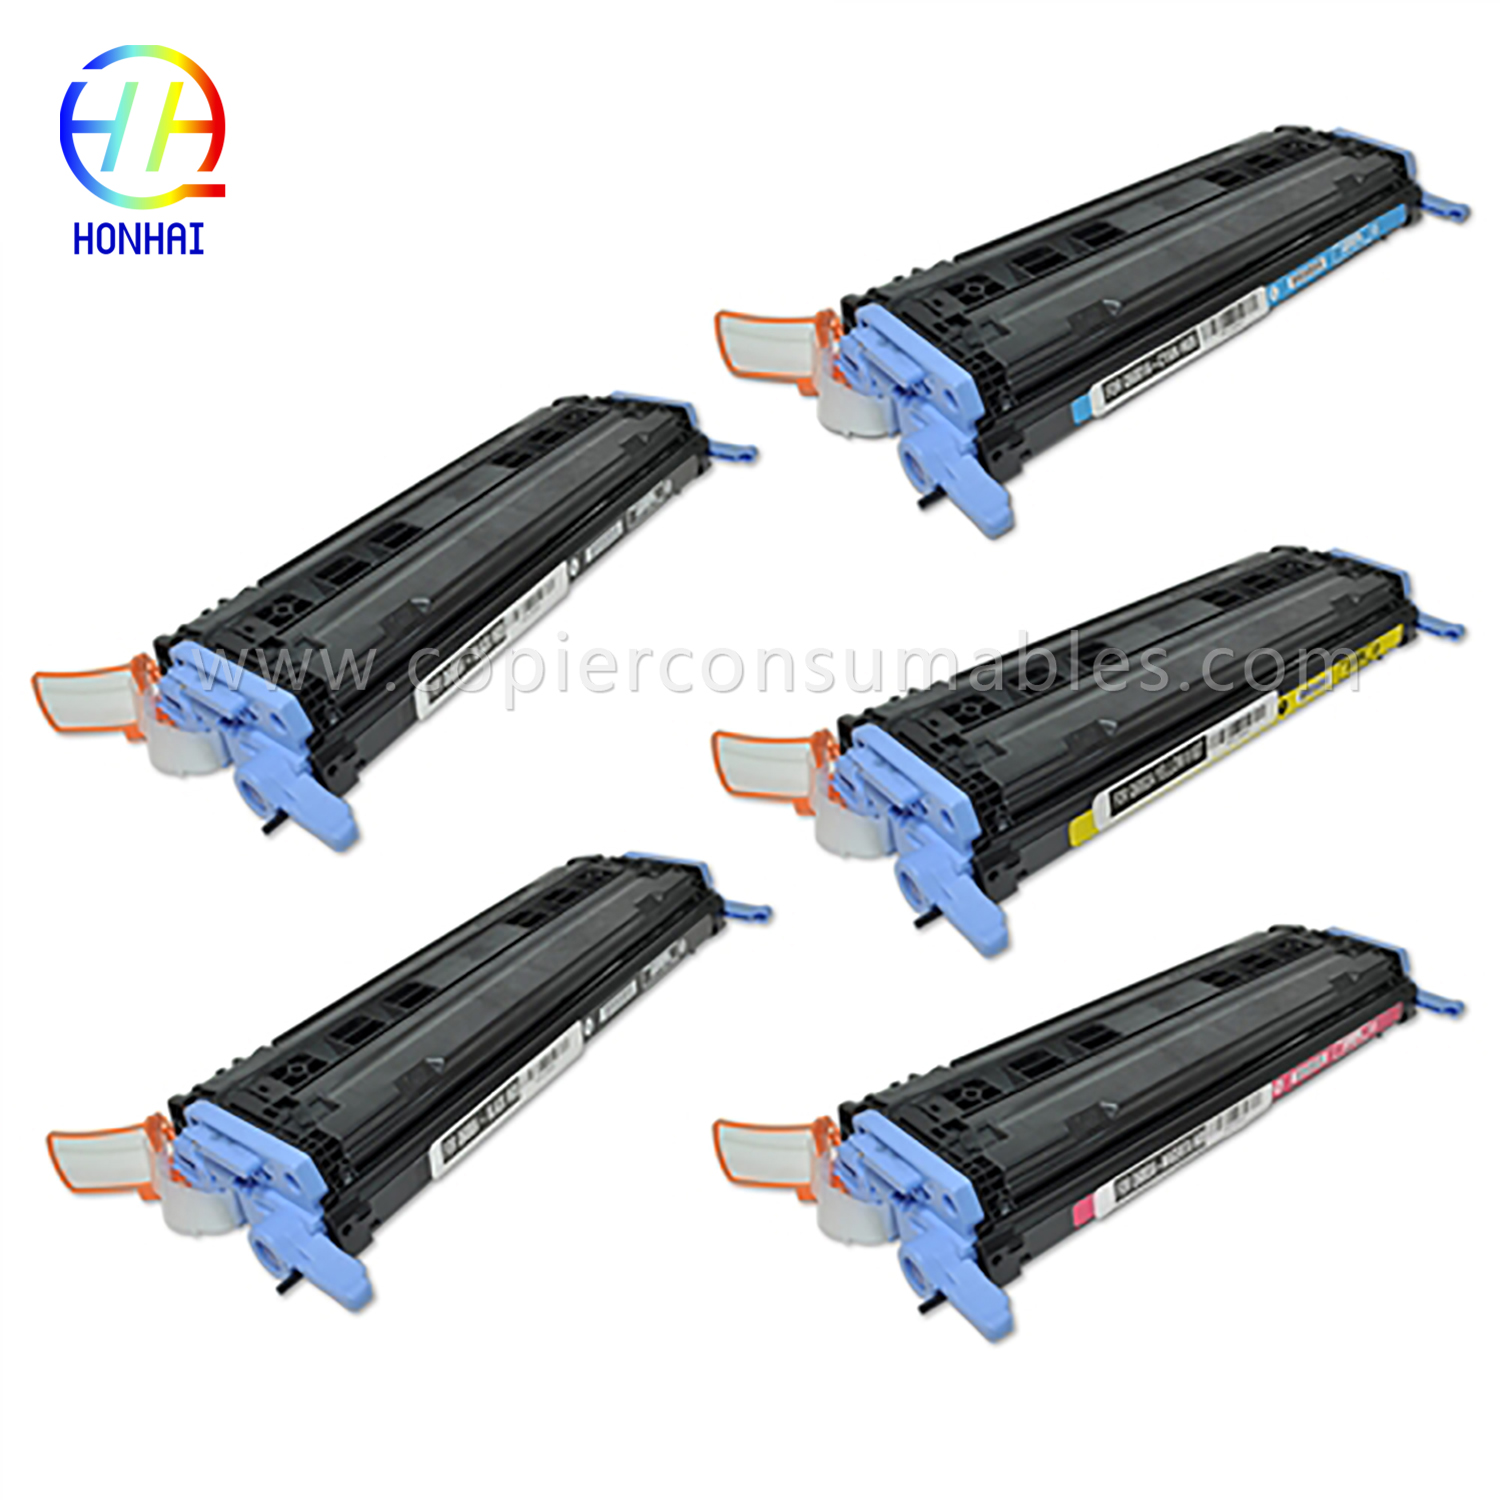 Toner Cartridge para sa HP Laserjet 1600 2600 2605 Cm1015mfp Cm1017mfp (Q6000A Q6001A Q6002A Q6003A) (2) 拷贝